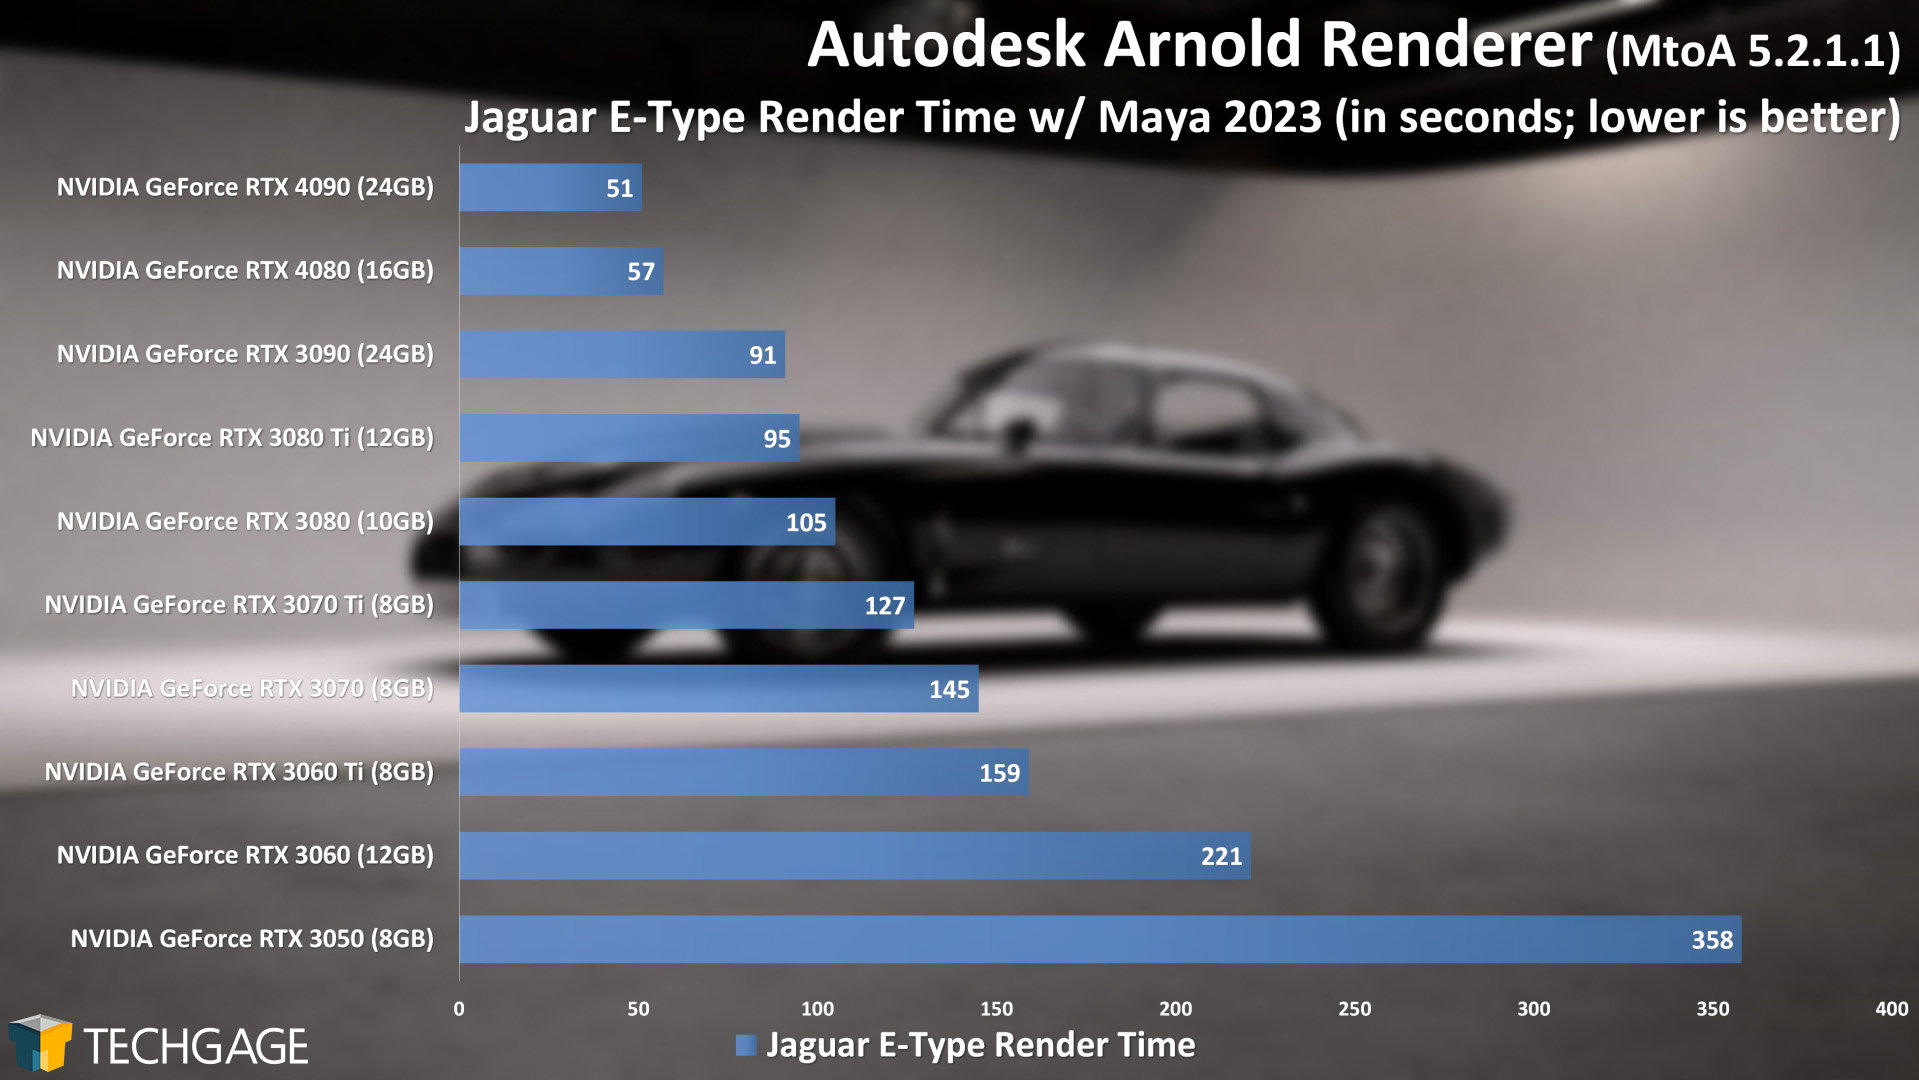 Autodesk Arnold GPU Render Performance - E-Type Render (NVIDIA GeForce RTX 4080)